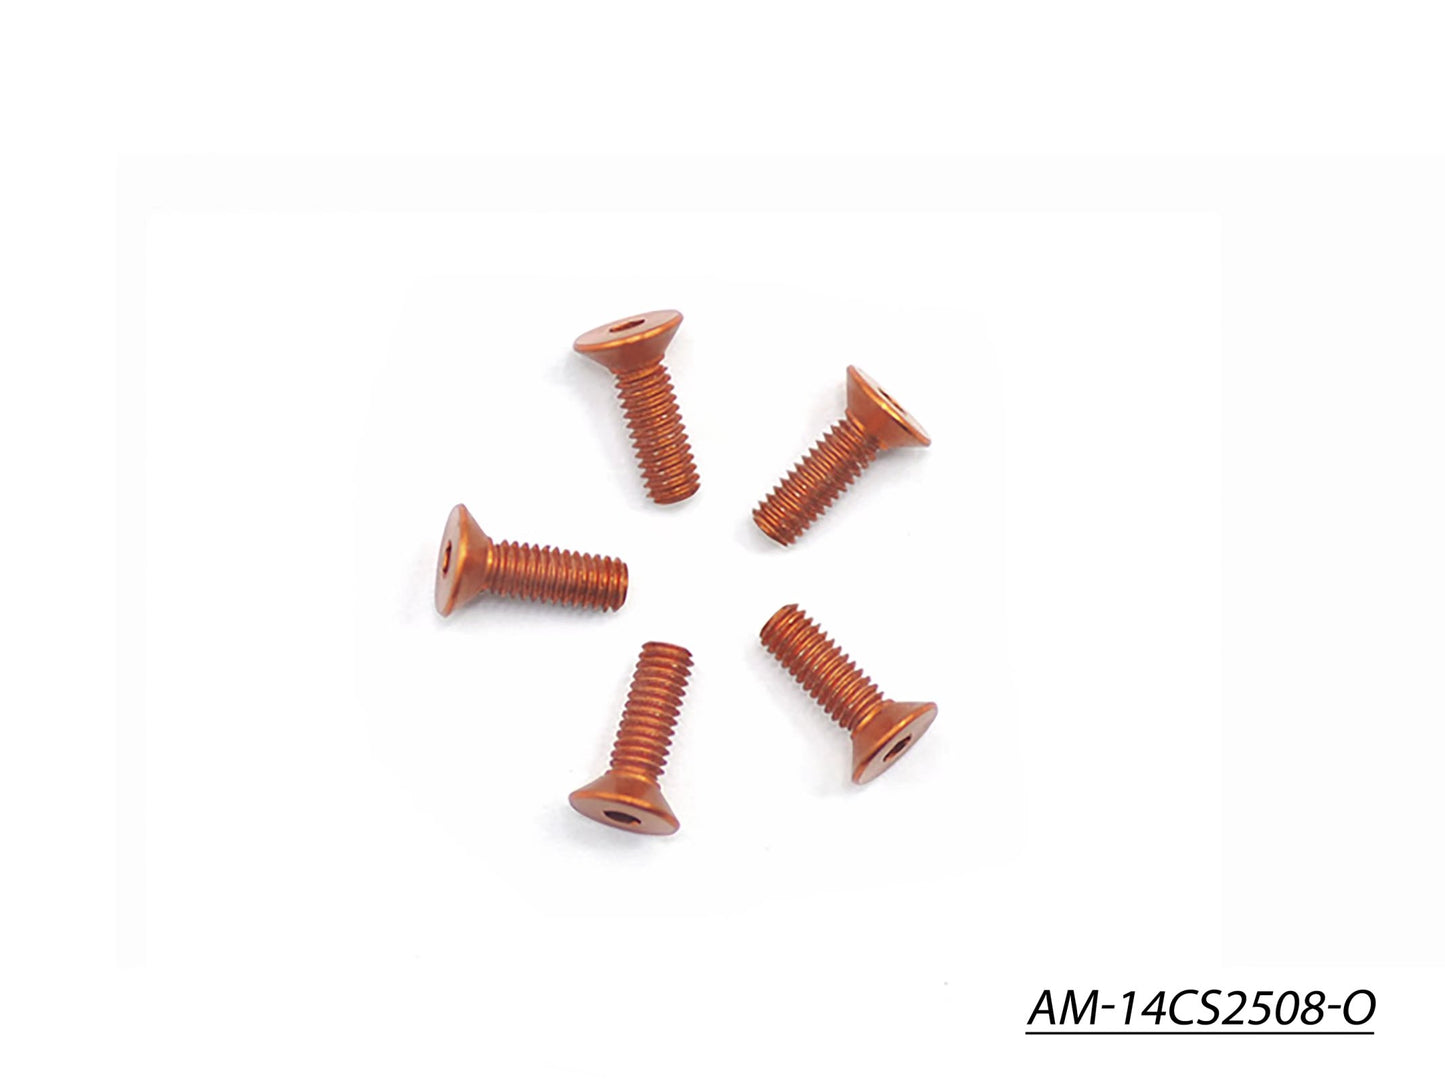 Alu Screw Allen Countersunk M2.5X8 Orange (7075) (5) (AM-14CS2508-O)